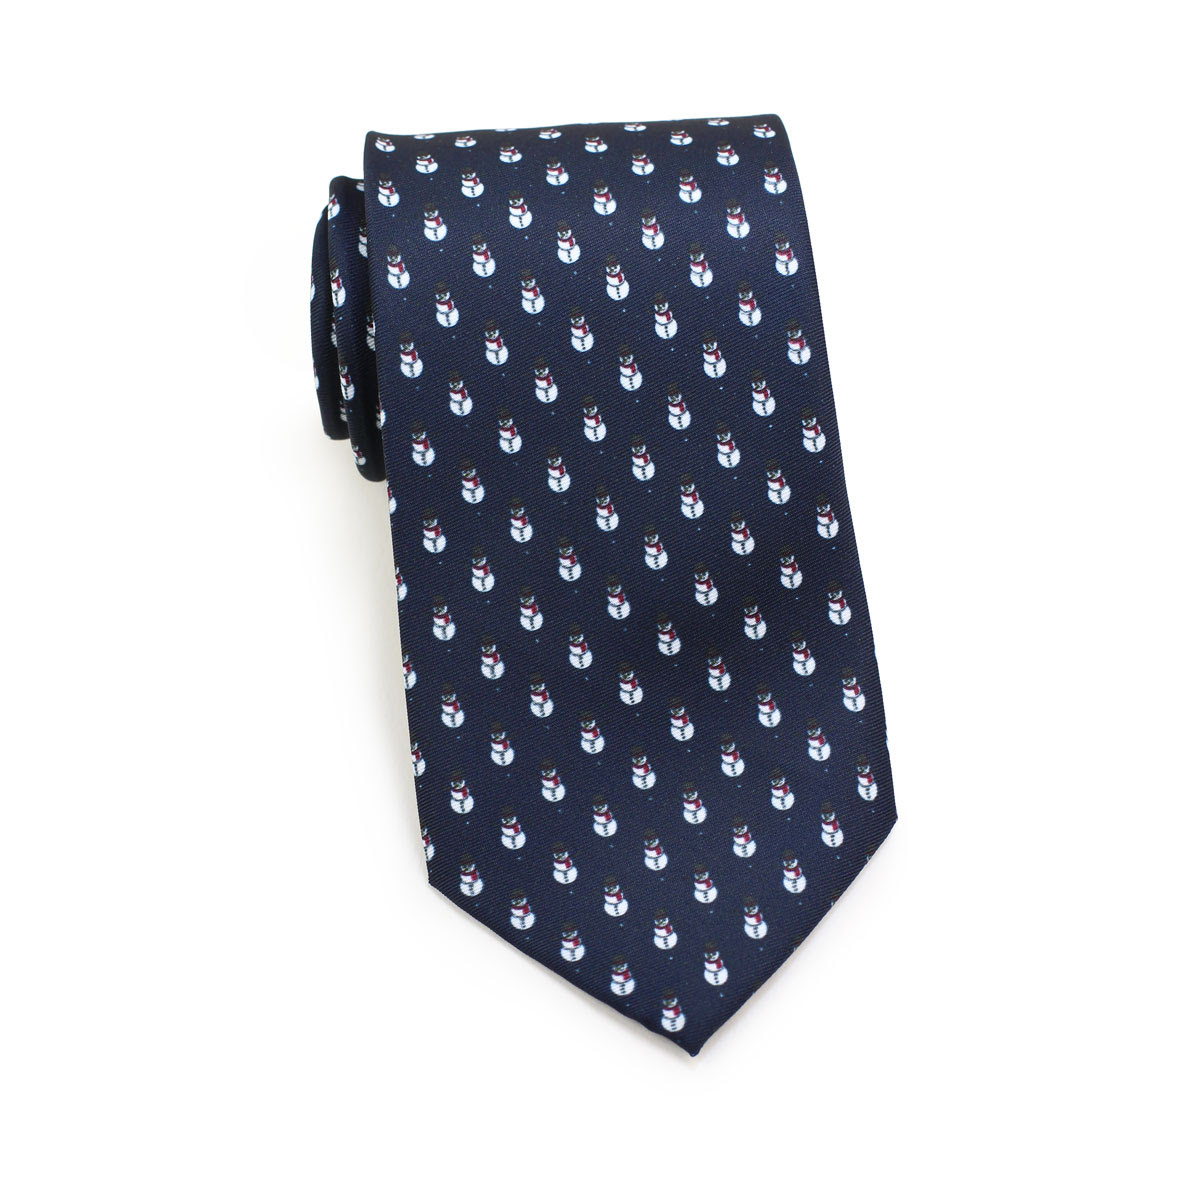 neckties with snowmen in navy blue